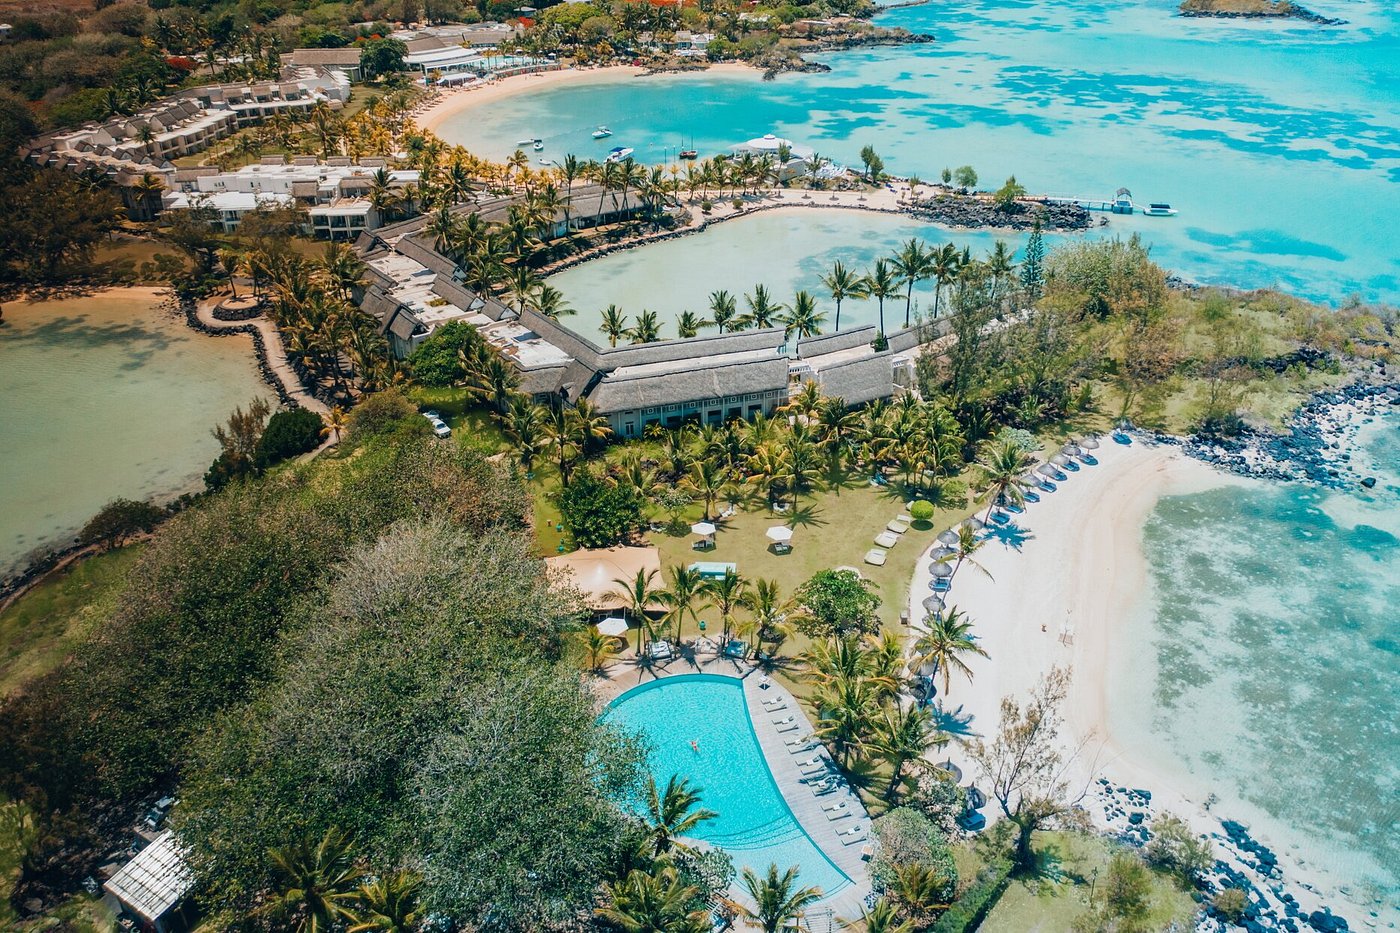 LUX Grand Gaube Resort & Villas Pool: Pictures & Reviews - Tripadvisor